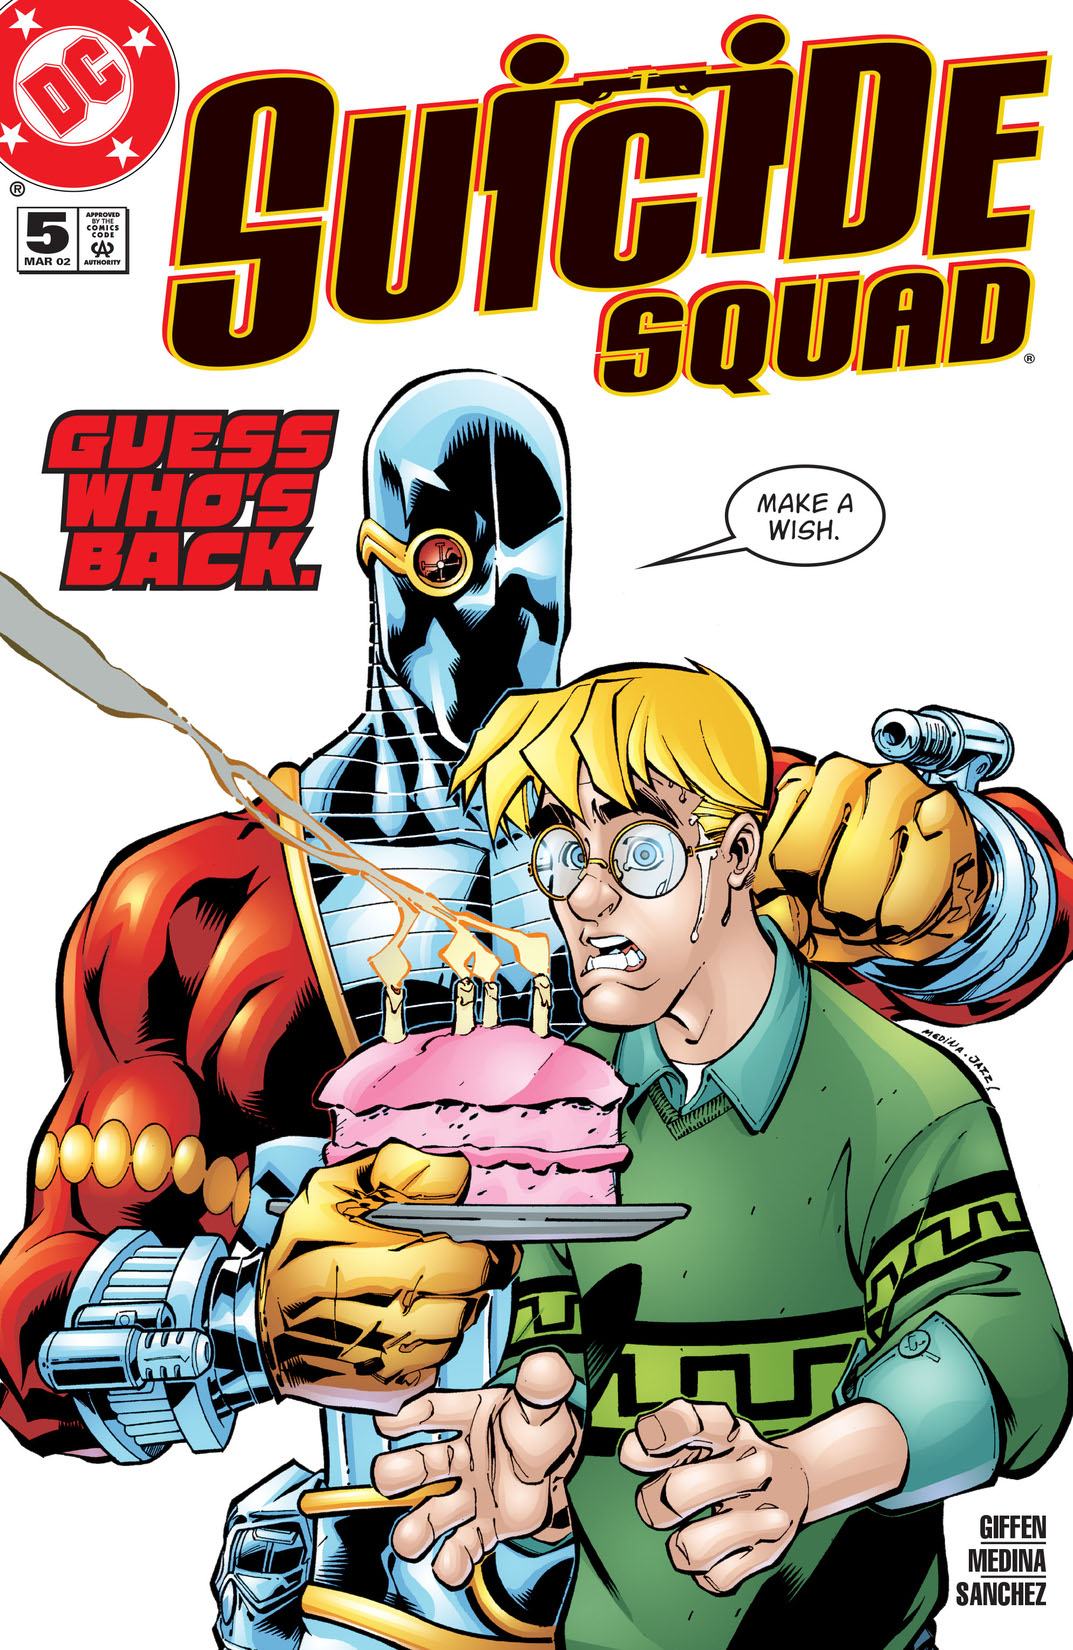 Suicide Squad (2001-) #5 preview images